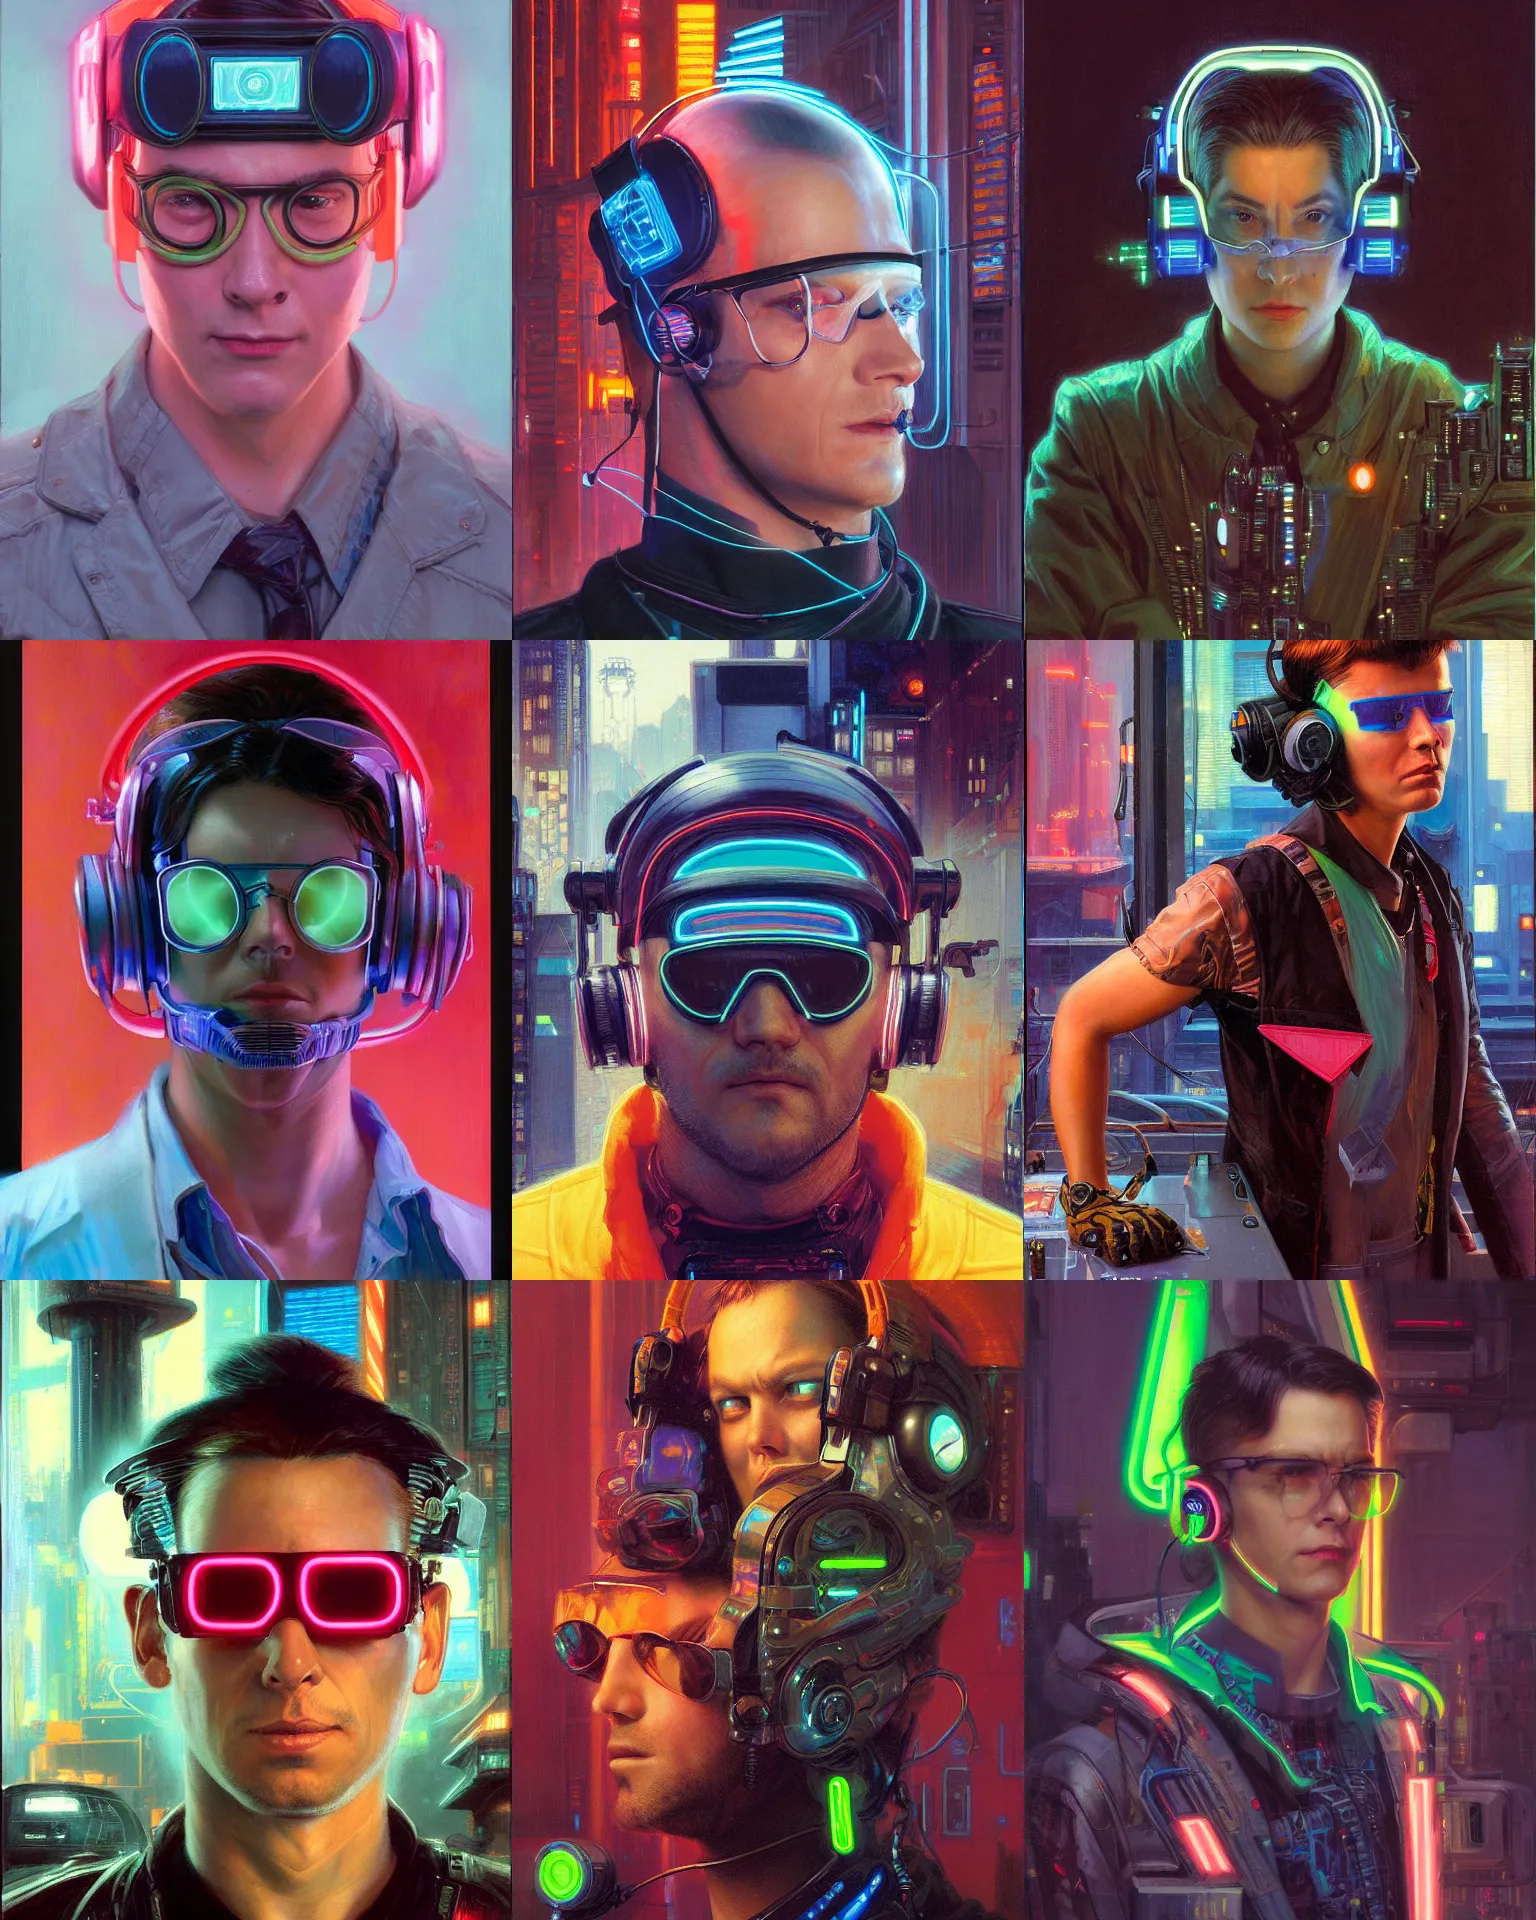 Prompt: neon cyberpunk programmer with thin eye visor and headset headshot portrait painting by donato giancola, kilian eng, john berkley, hayao miyazaki, j. c. leyendecker, mead schaeffer fashion photography